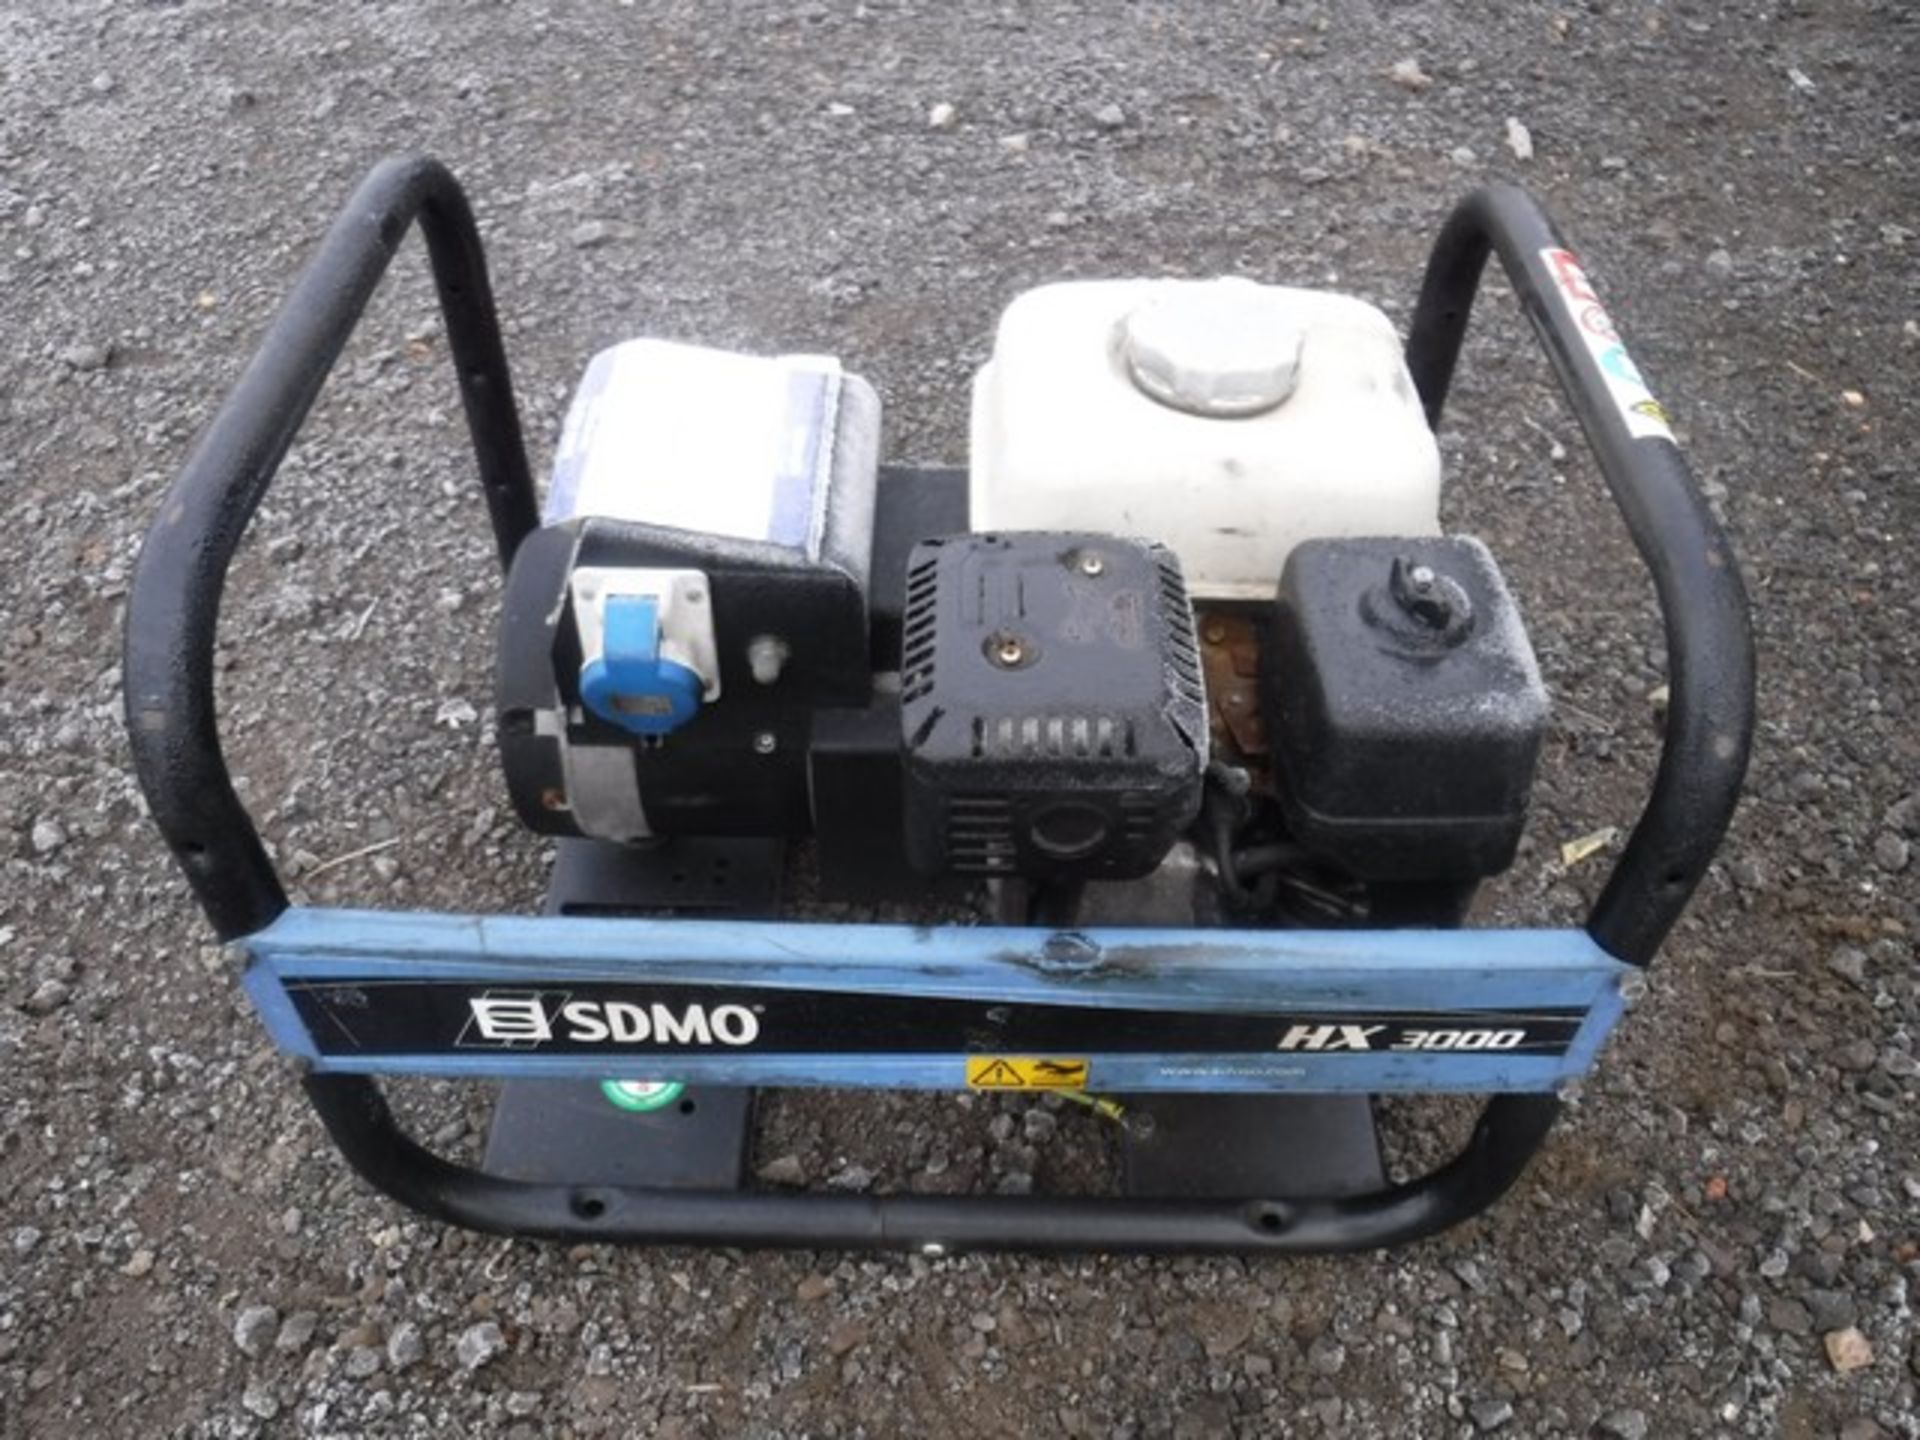 SDMD HX3000 petrol generator.S/N 01-Z016-7506065-024